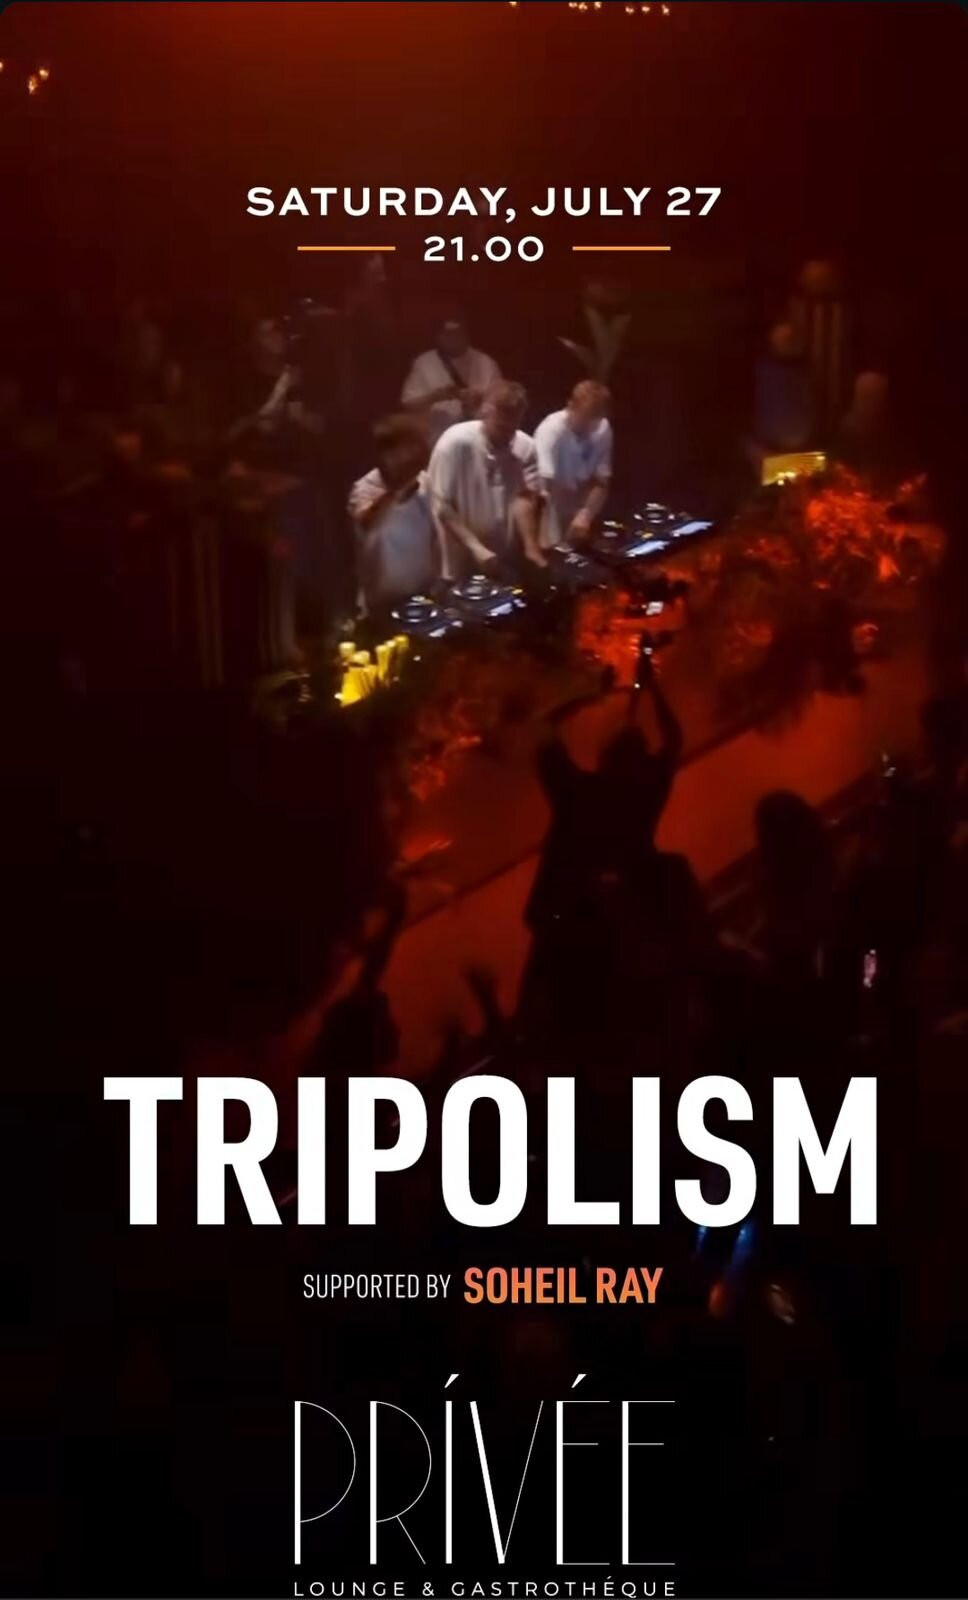 TRIPOLISM music performance at Privee Alanya on July 27th